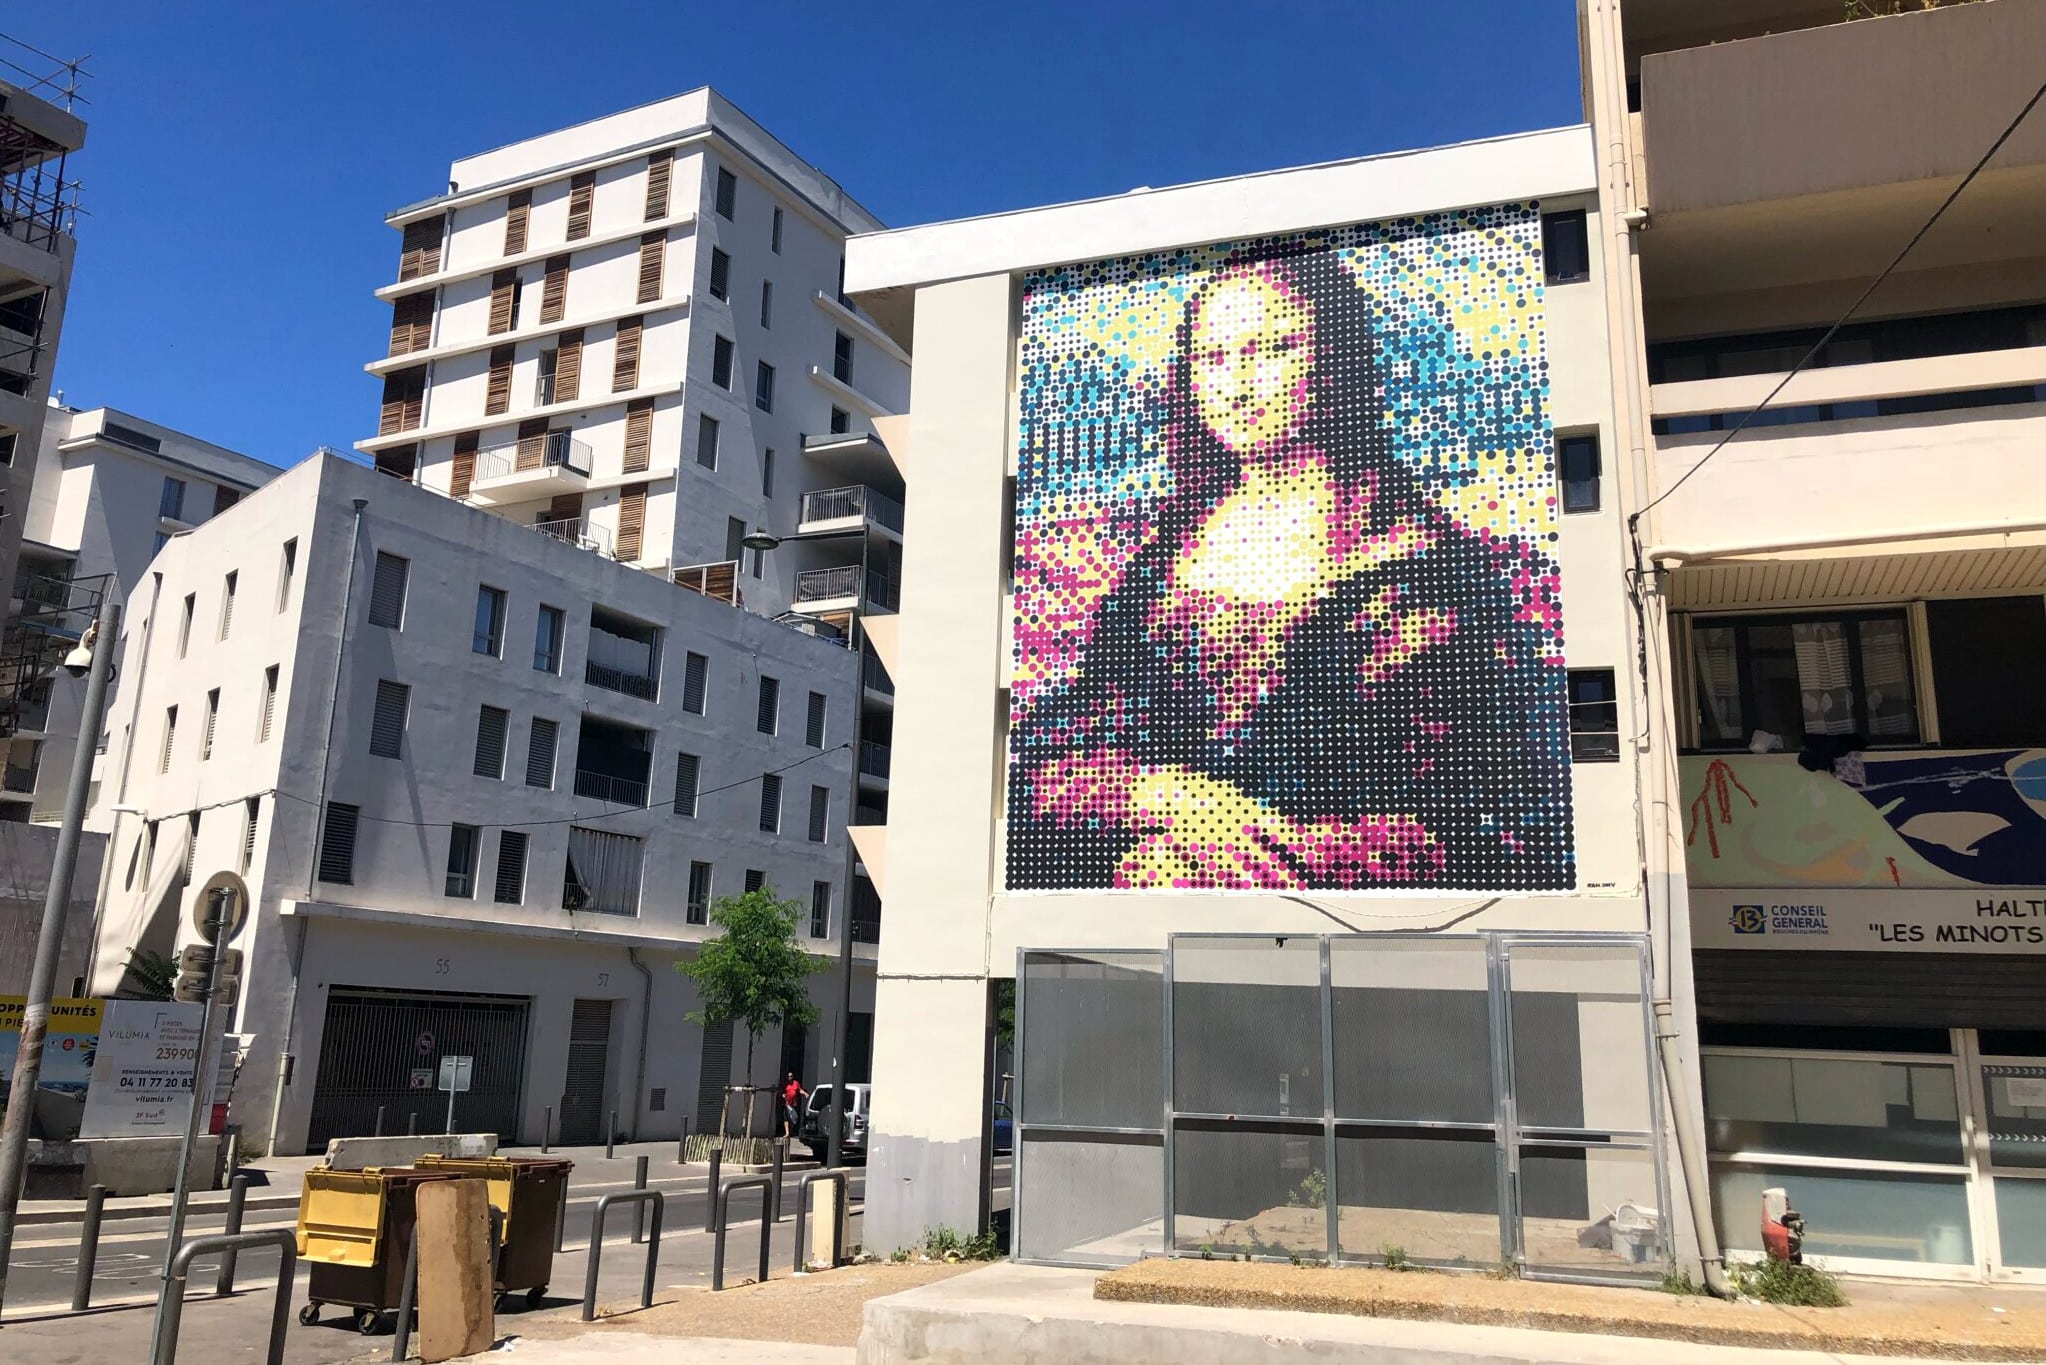 Joconde, Marseille : une immense fresque de la Joconde s&rsquo;expose à Fonscolombes, Made in Marseille